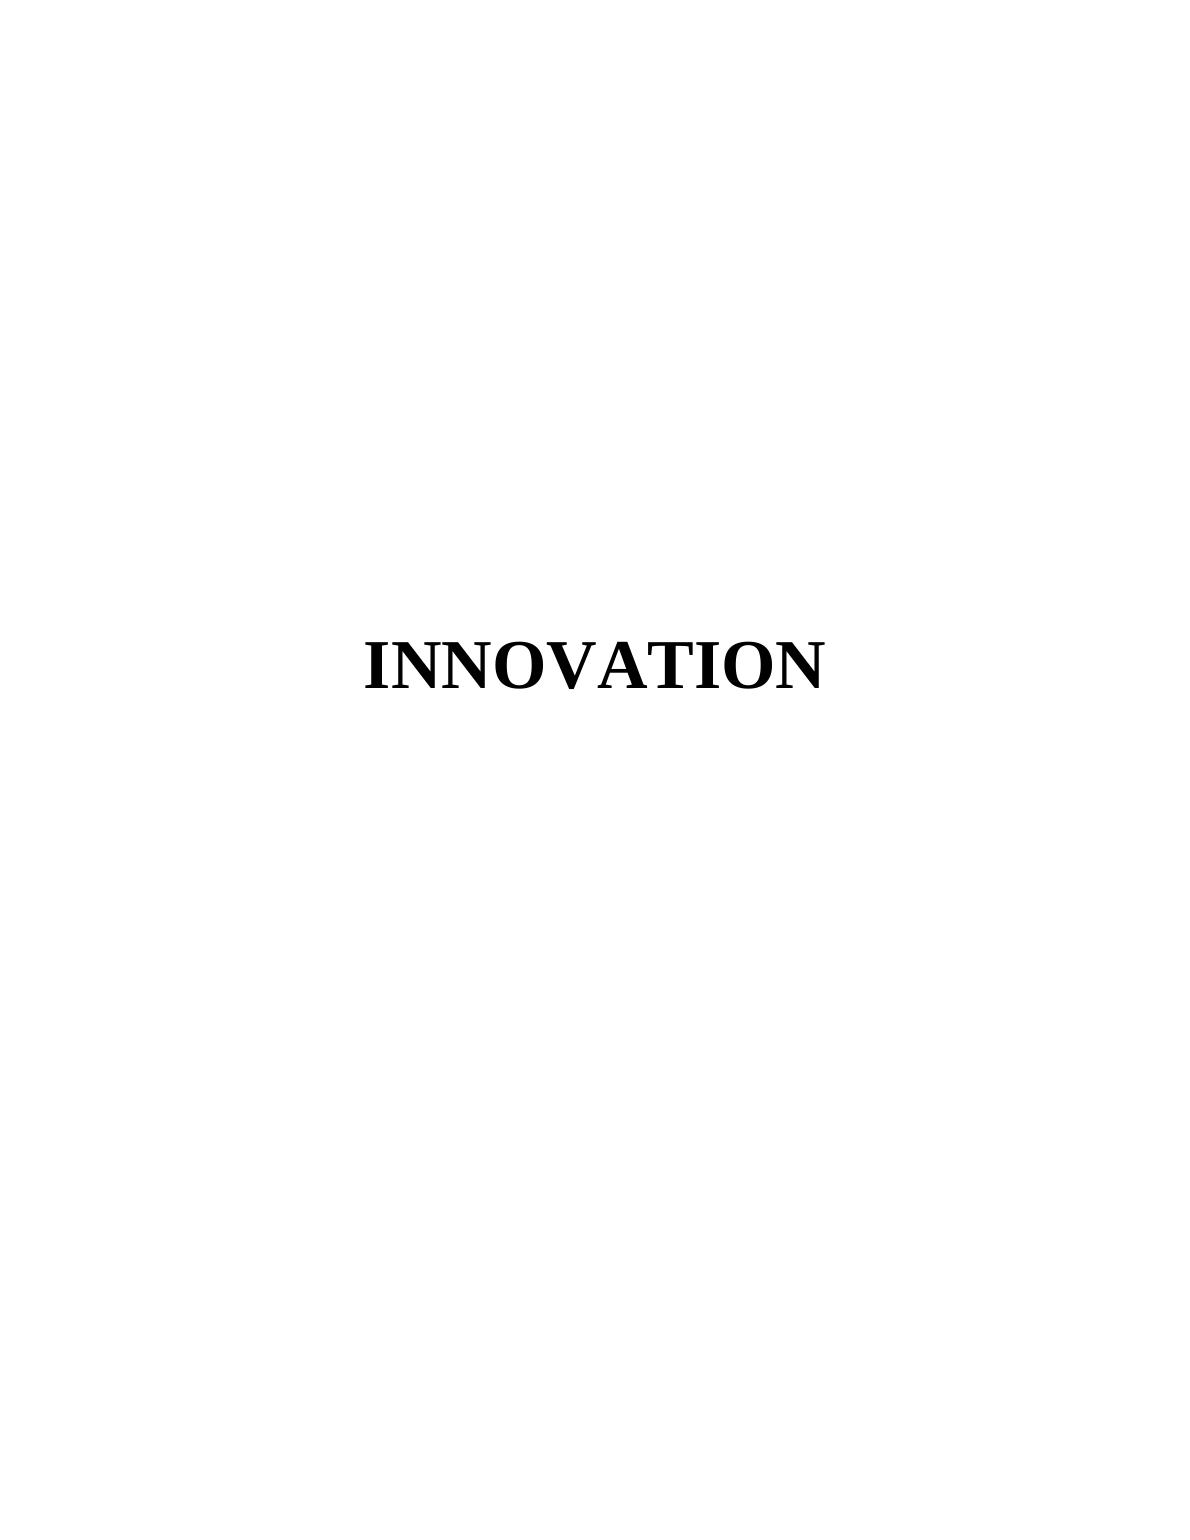 Essay on Importance of Innovation_1